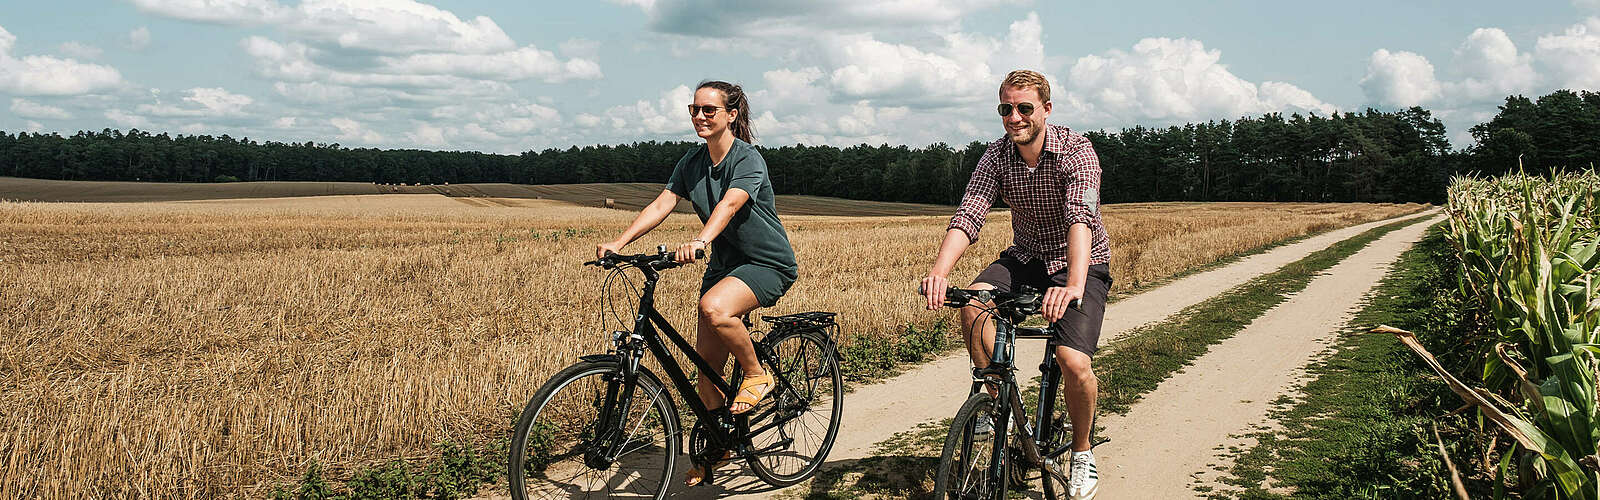 Paar auf Fahrrädern  ,
        
    

        Foto: TMB Fotoarchiv/René Pätznick